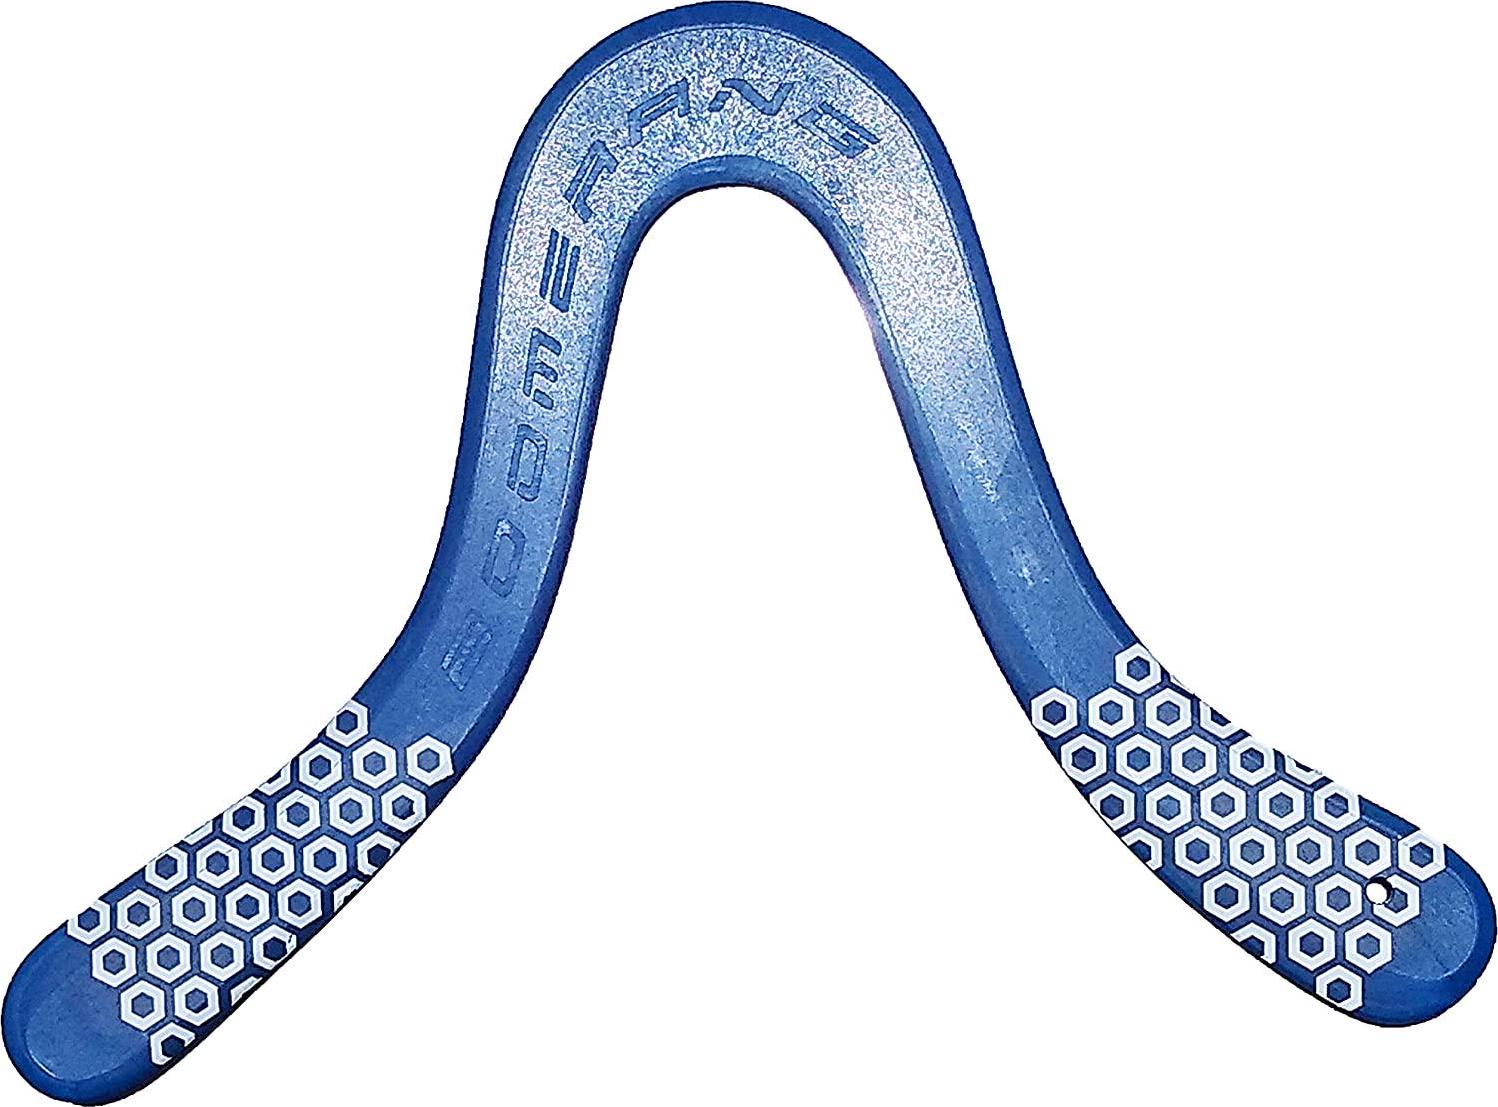 Colorado Boomerangs, Manu Pro Blue Boomerang - for Kids 8-80! Great Molded Boomerangs Designed by World Champion Manuel Schuetz!